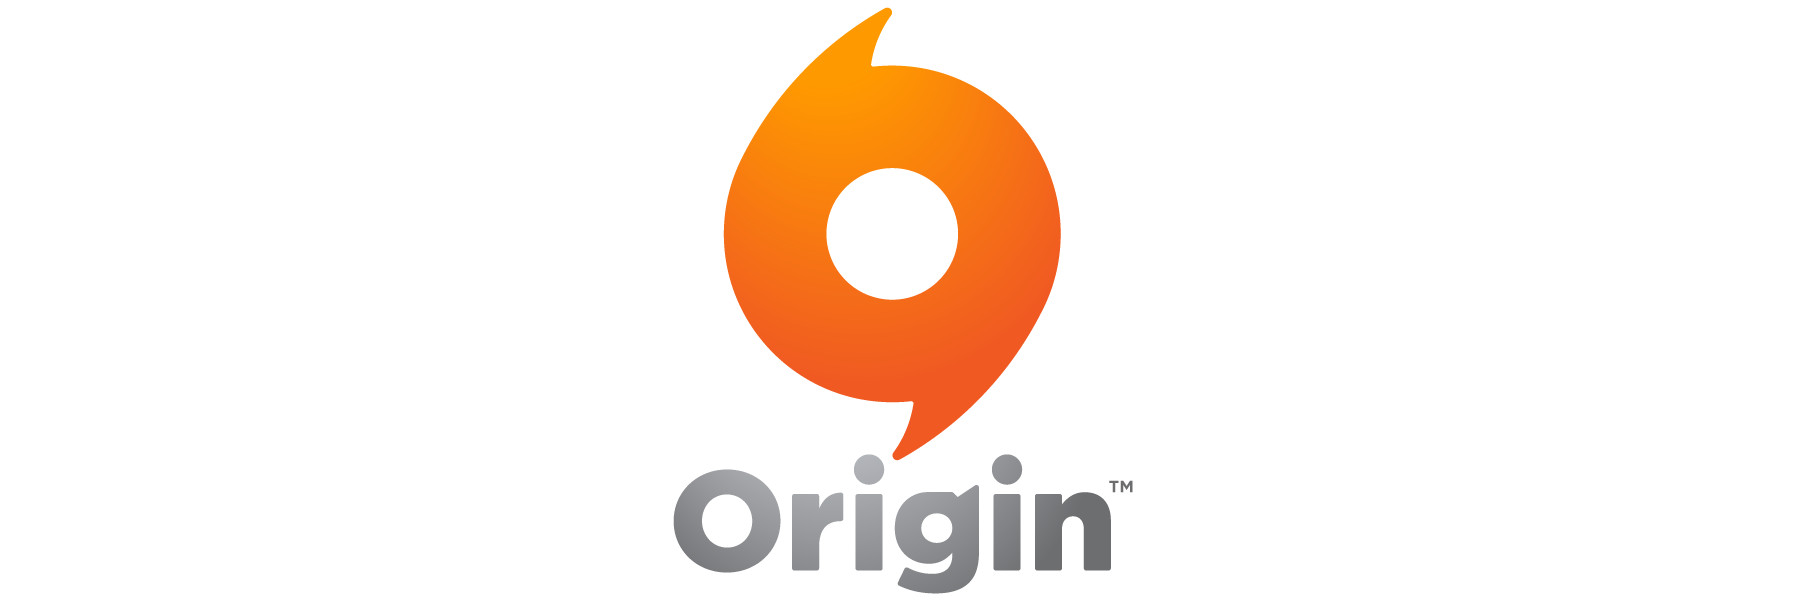 download origin 8.5 full crack